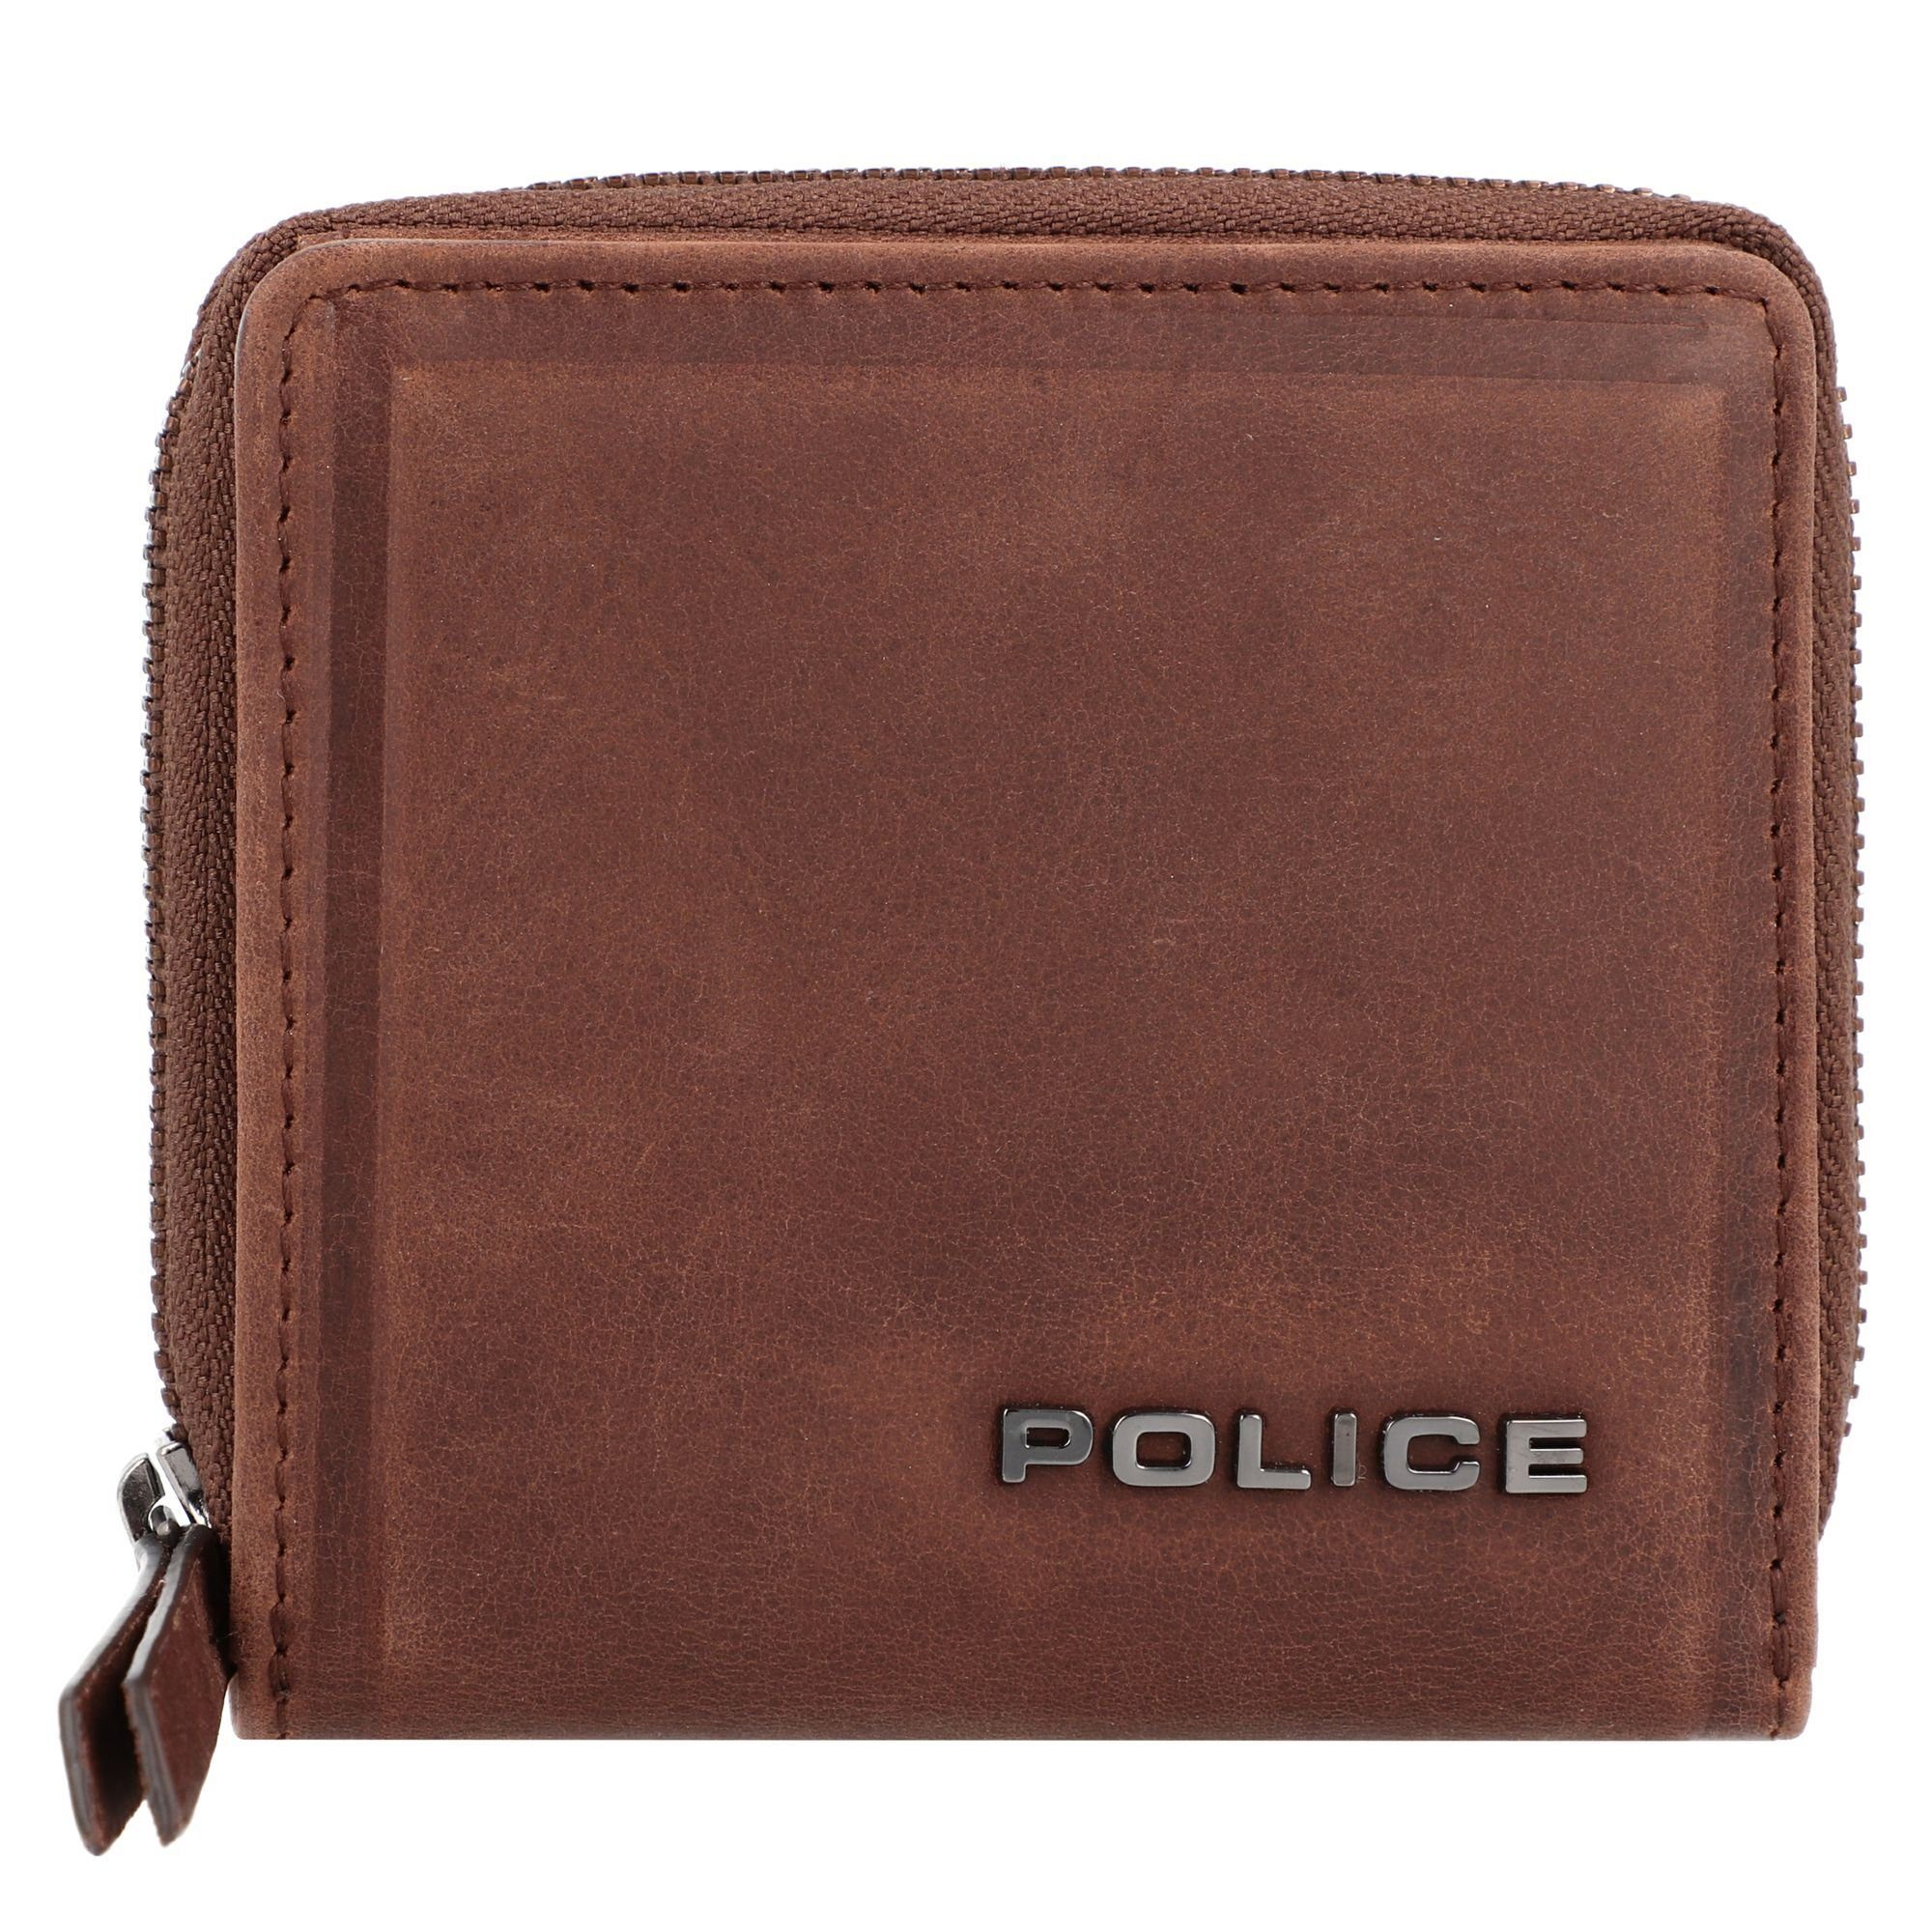 Police Leder Geldbörse, brown